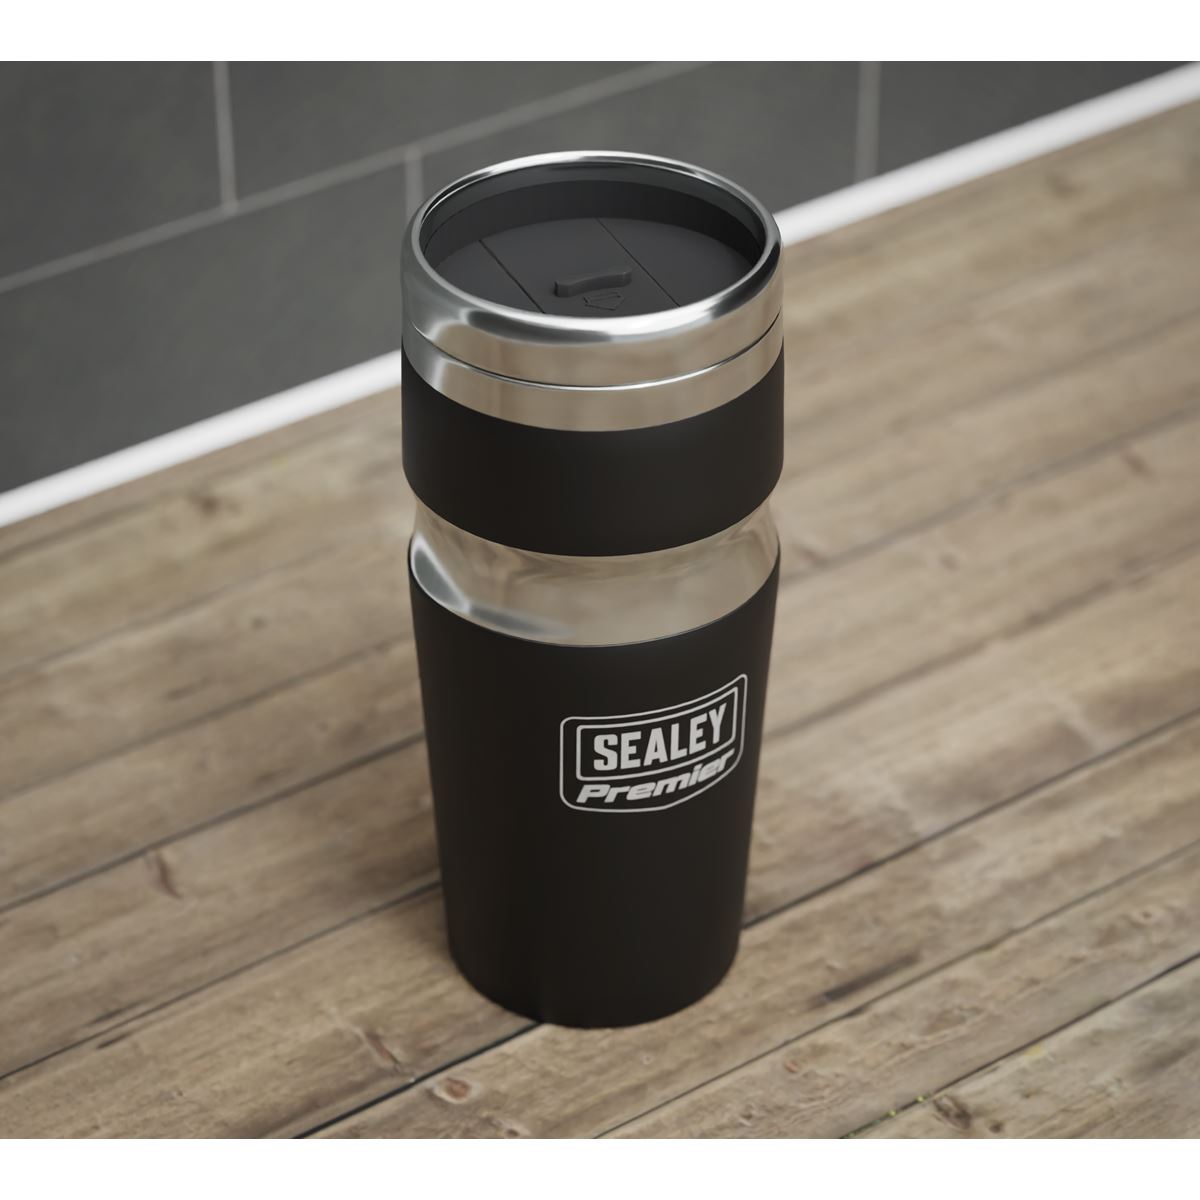 Sealey Premier Travel Mug with Tool Kit